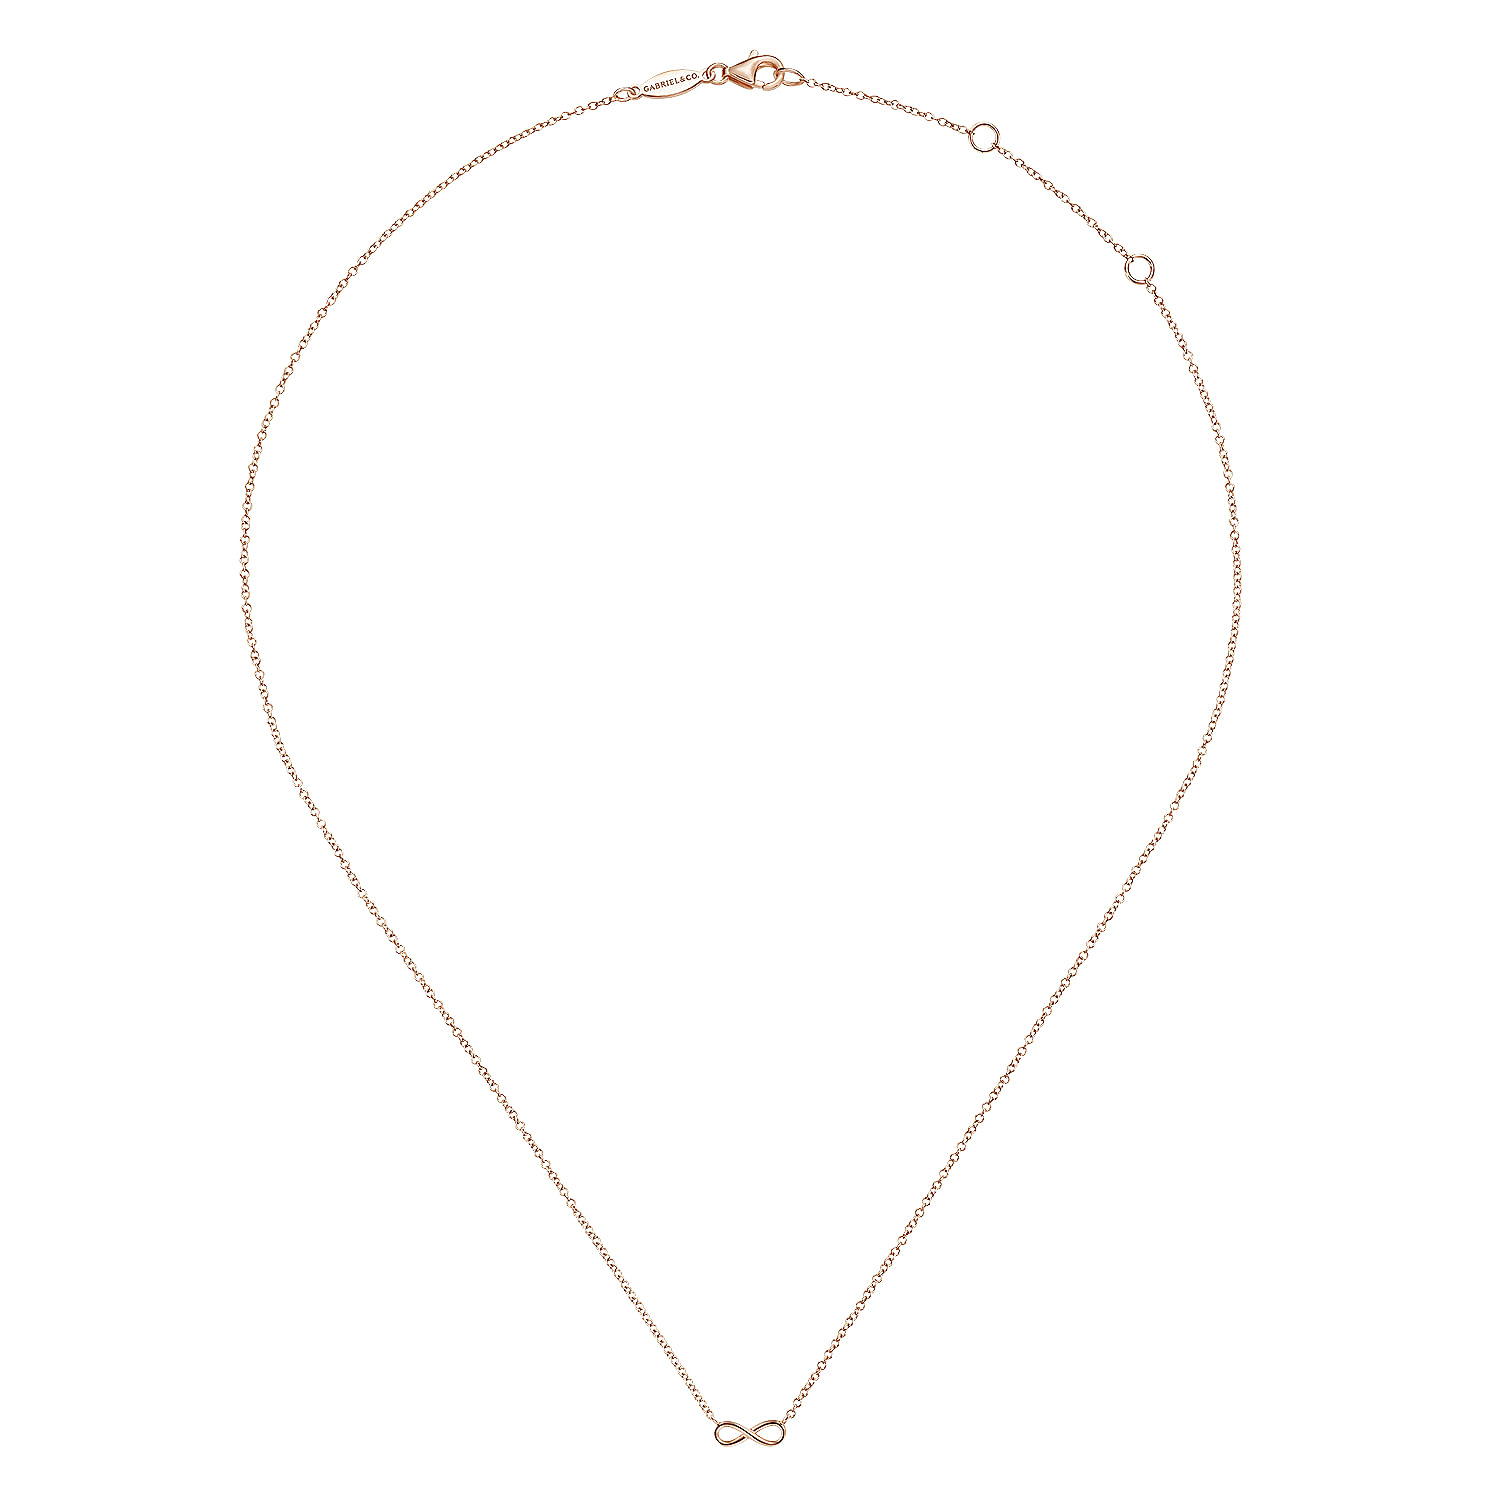 14K Rose Gold Infinity Pendant Necklace